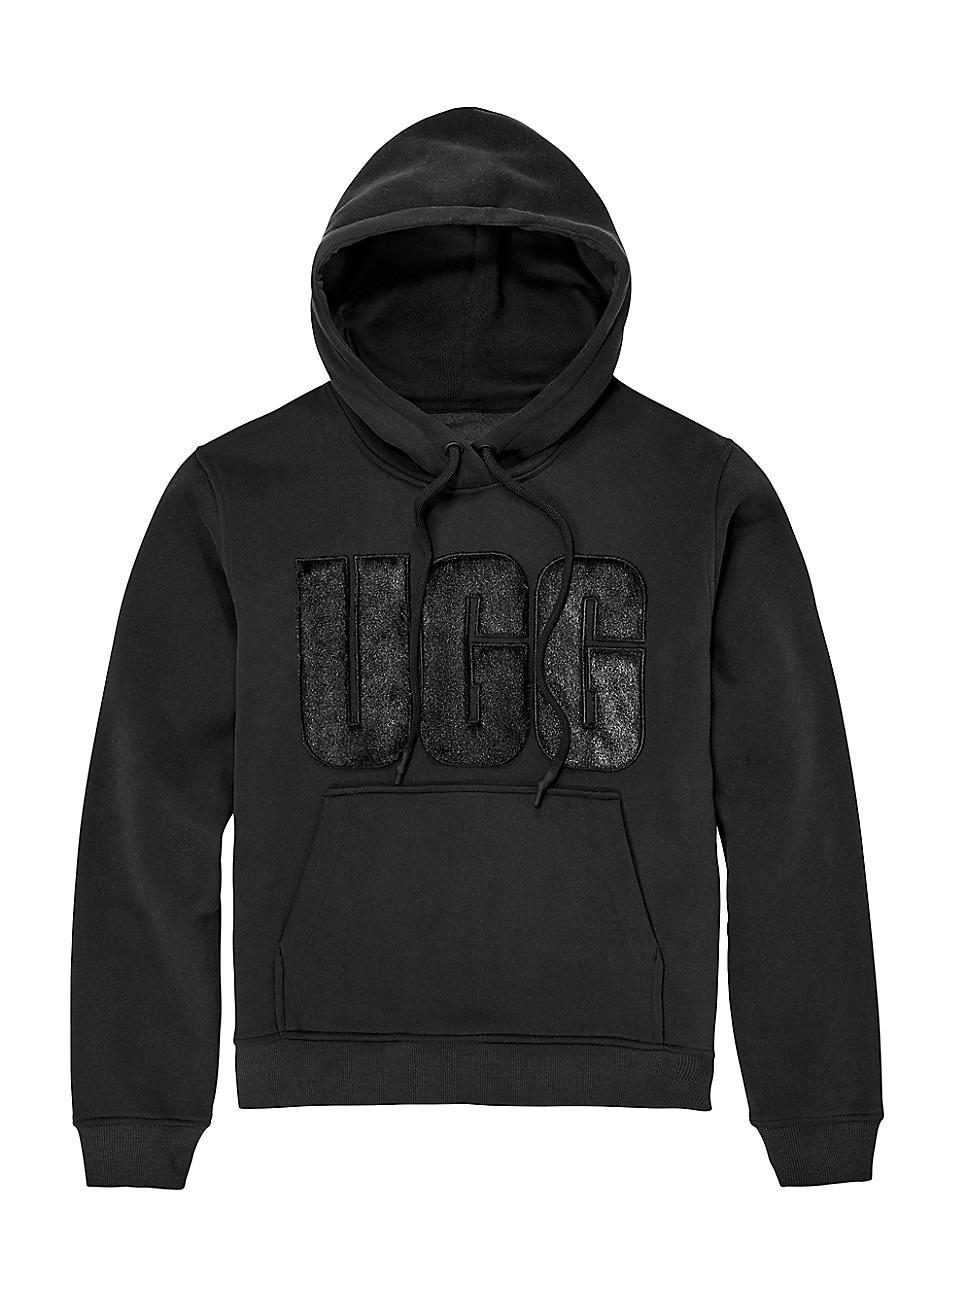 UGG(r) Rey Fuzzy Logo Hoodie Product Image